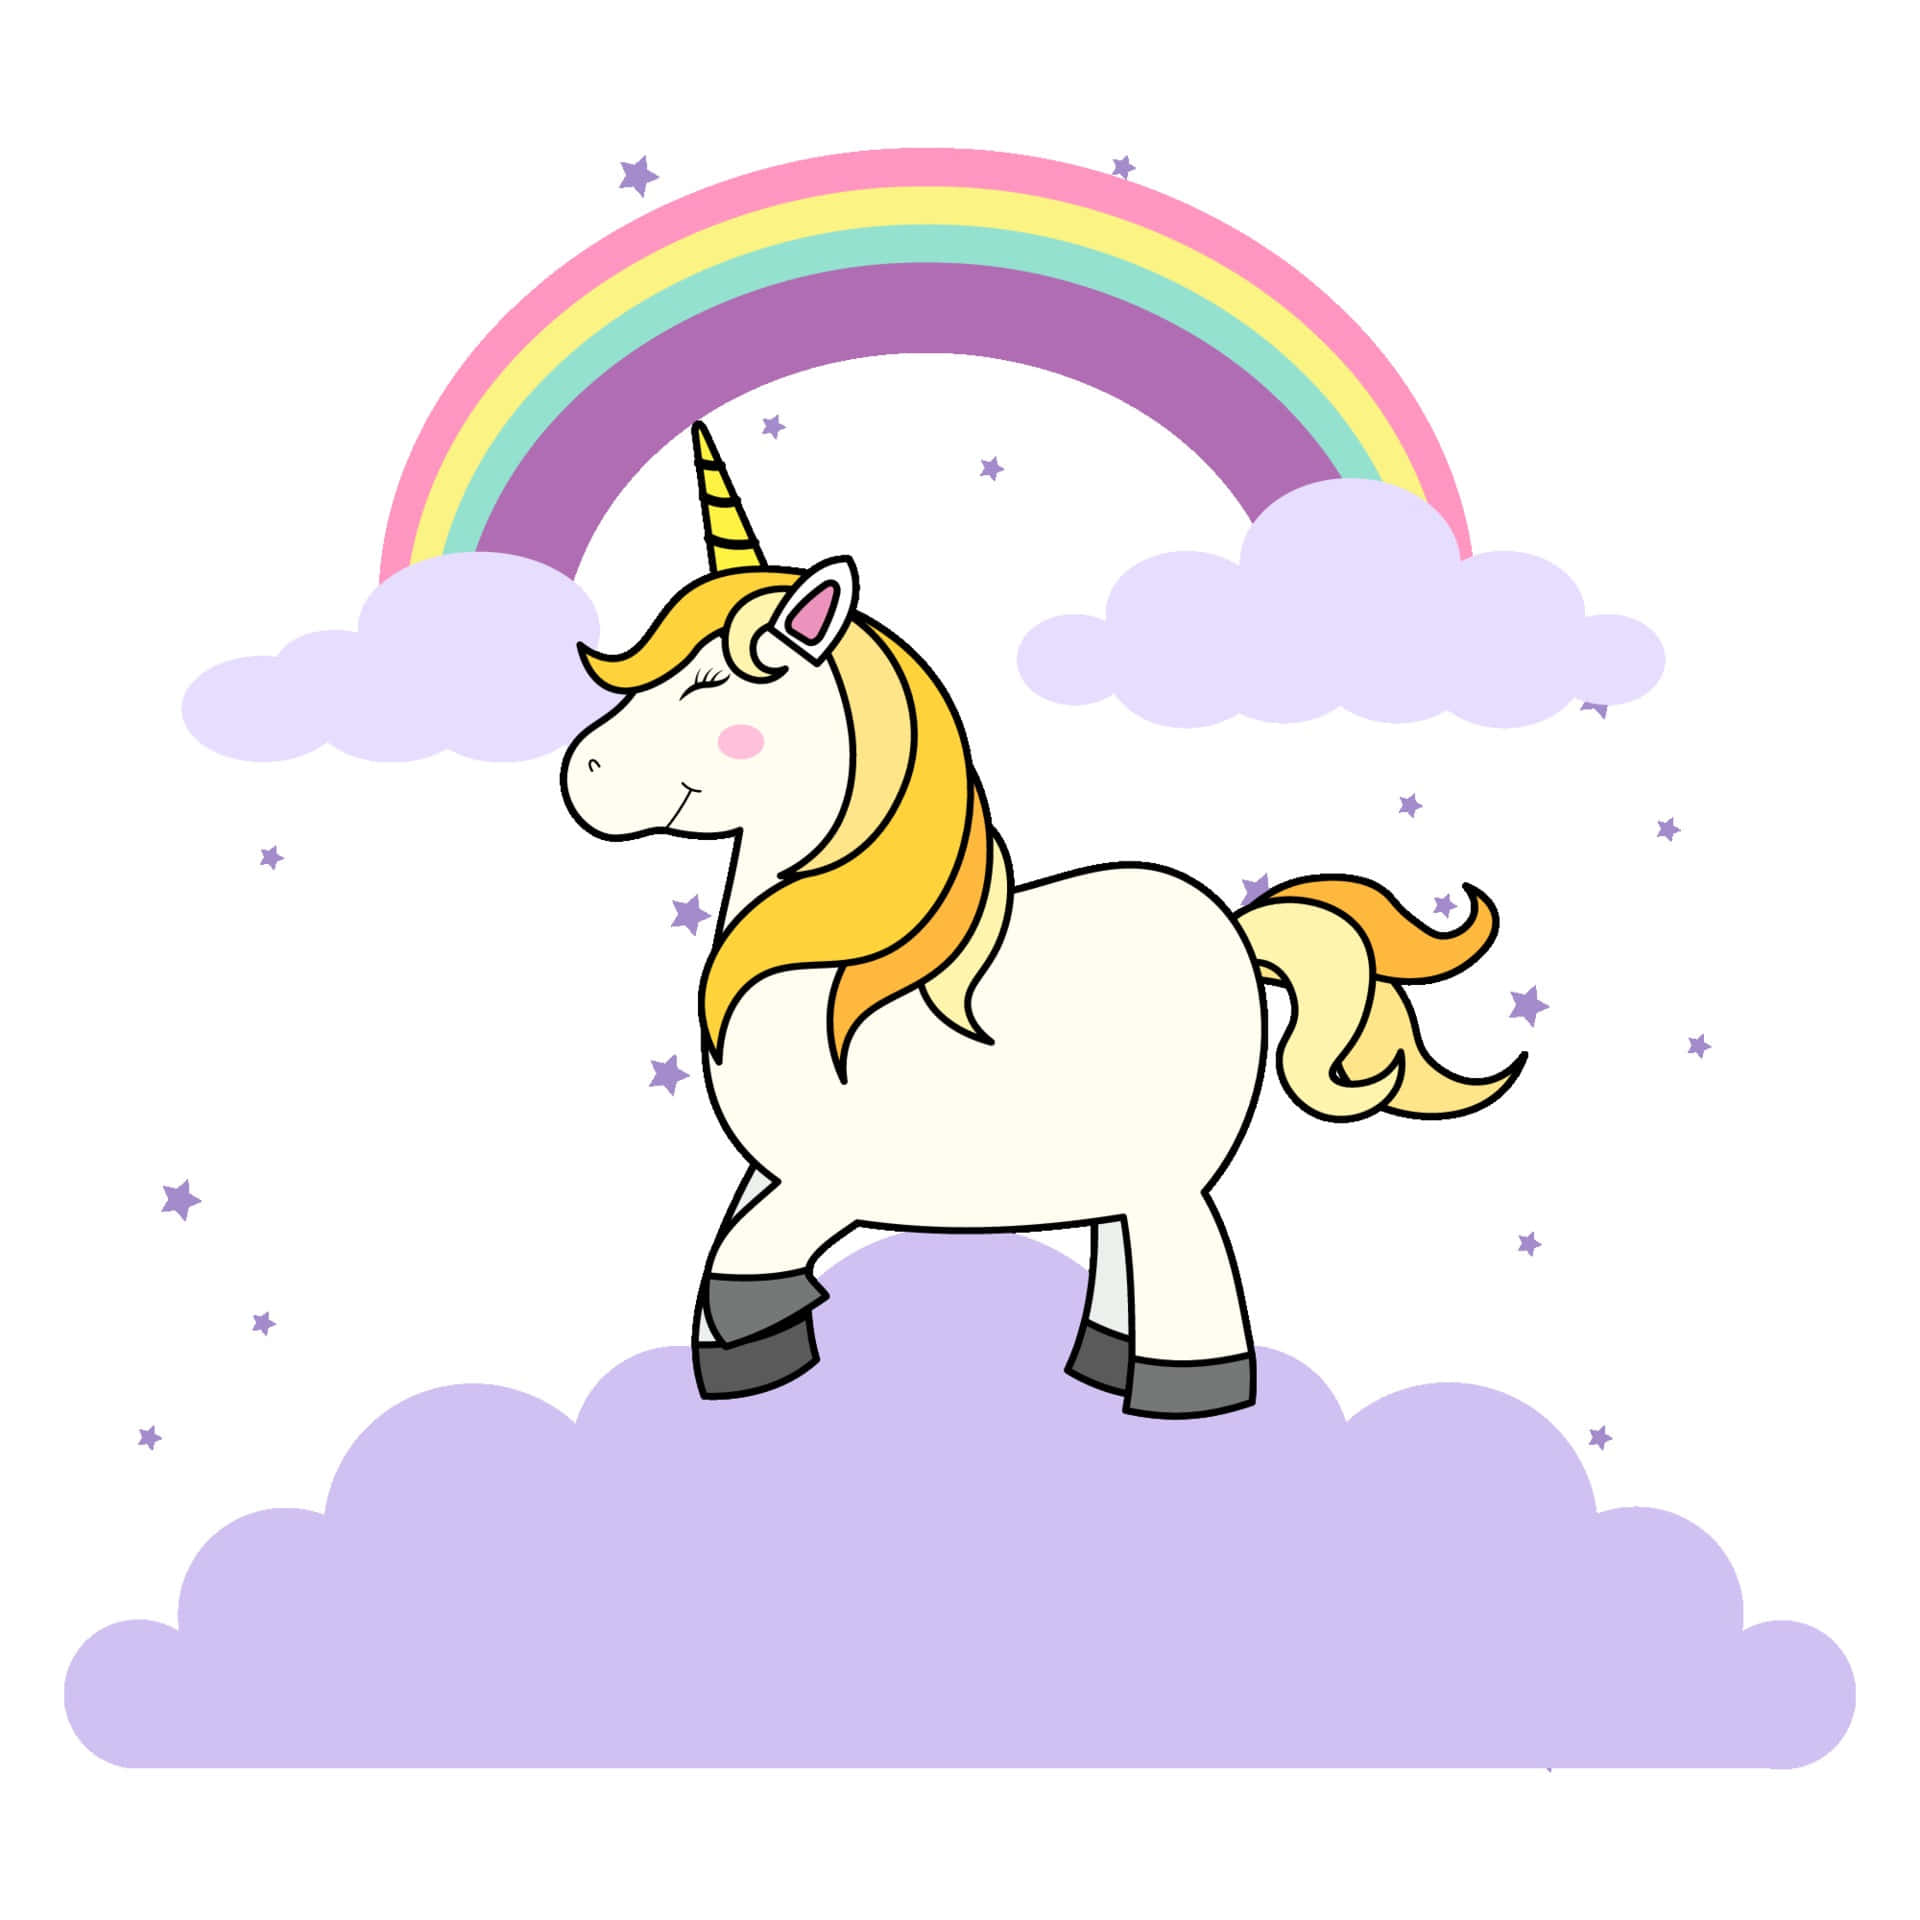 Cute rainbow unicorn with a long mane Royalty Free Vector